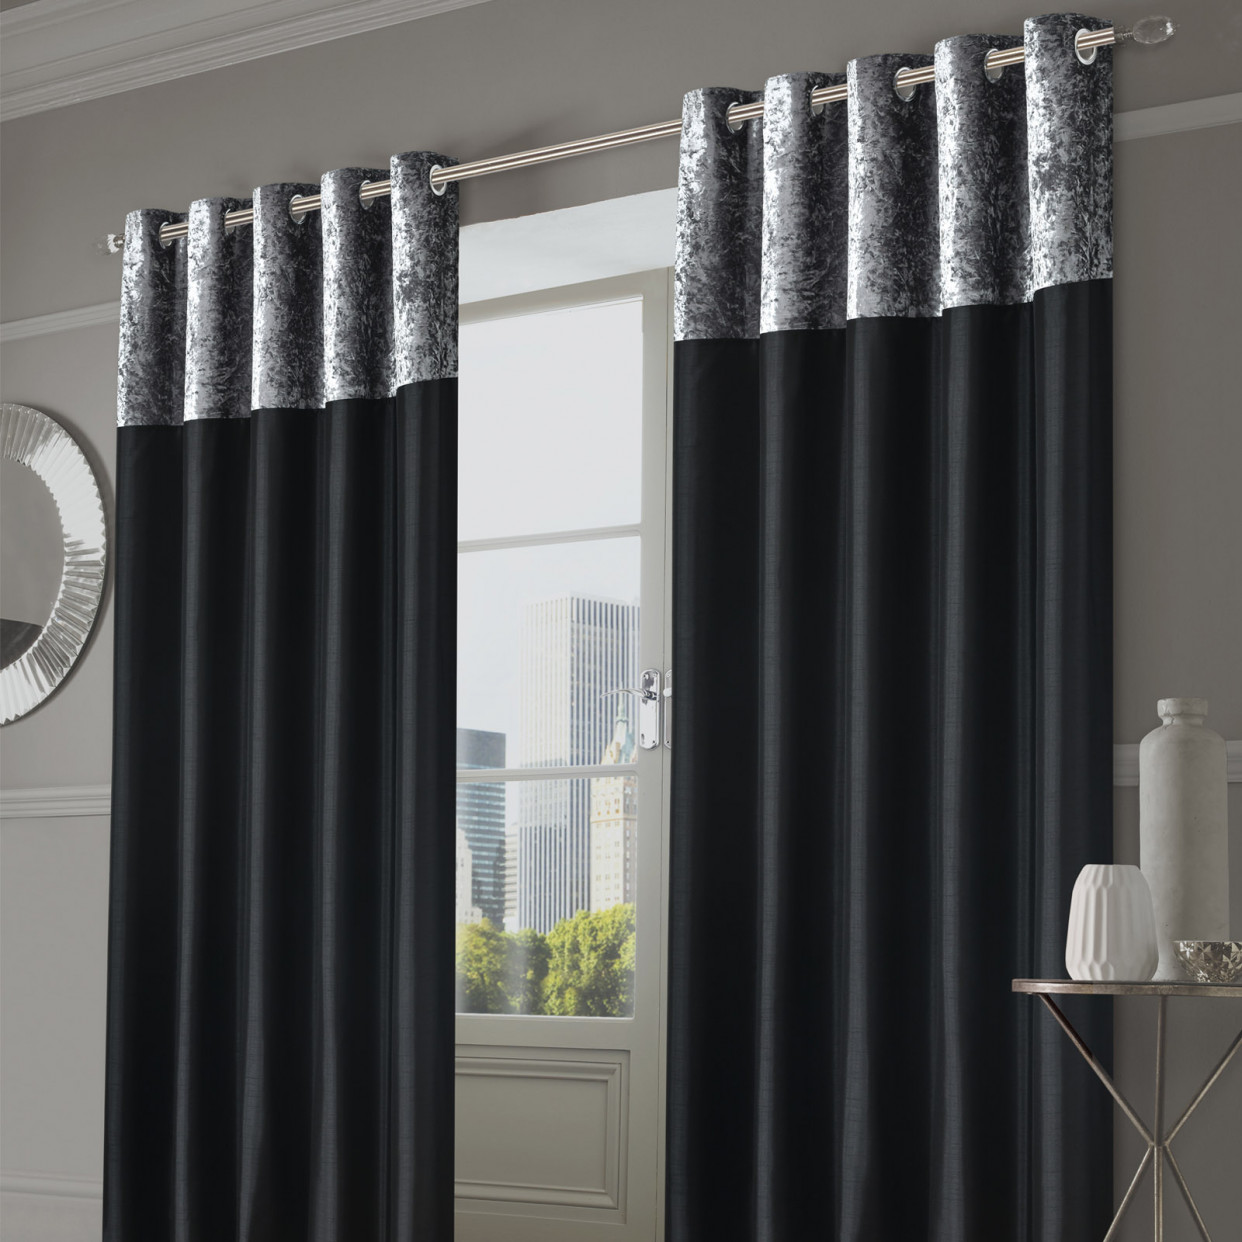 Sienna Home Manhattan Crushed Velvet Band Eyelet Curtains - Black, 90" x 54">